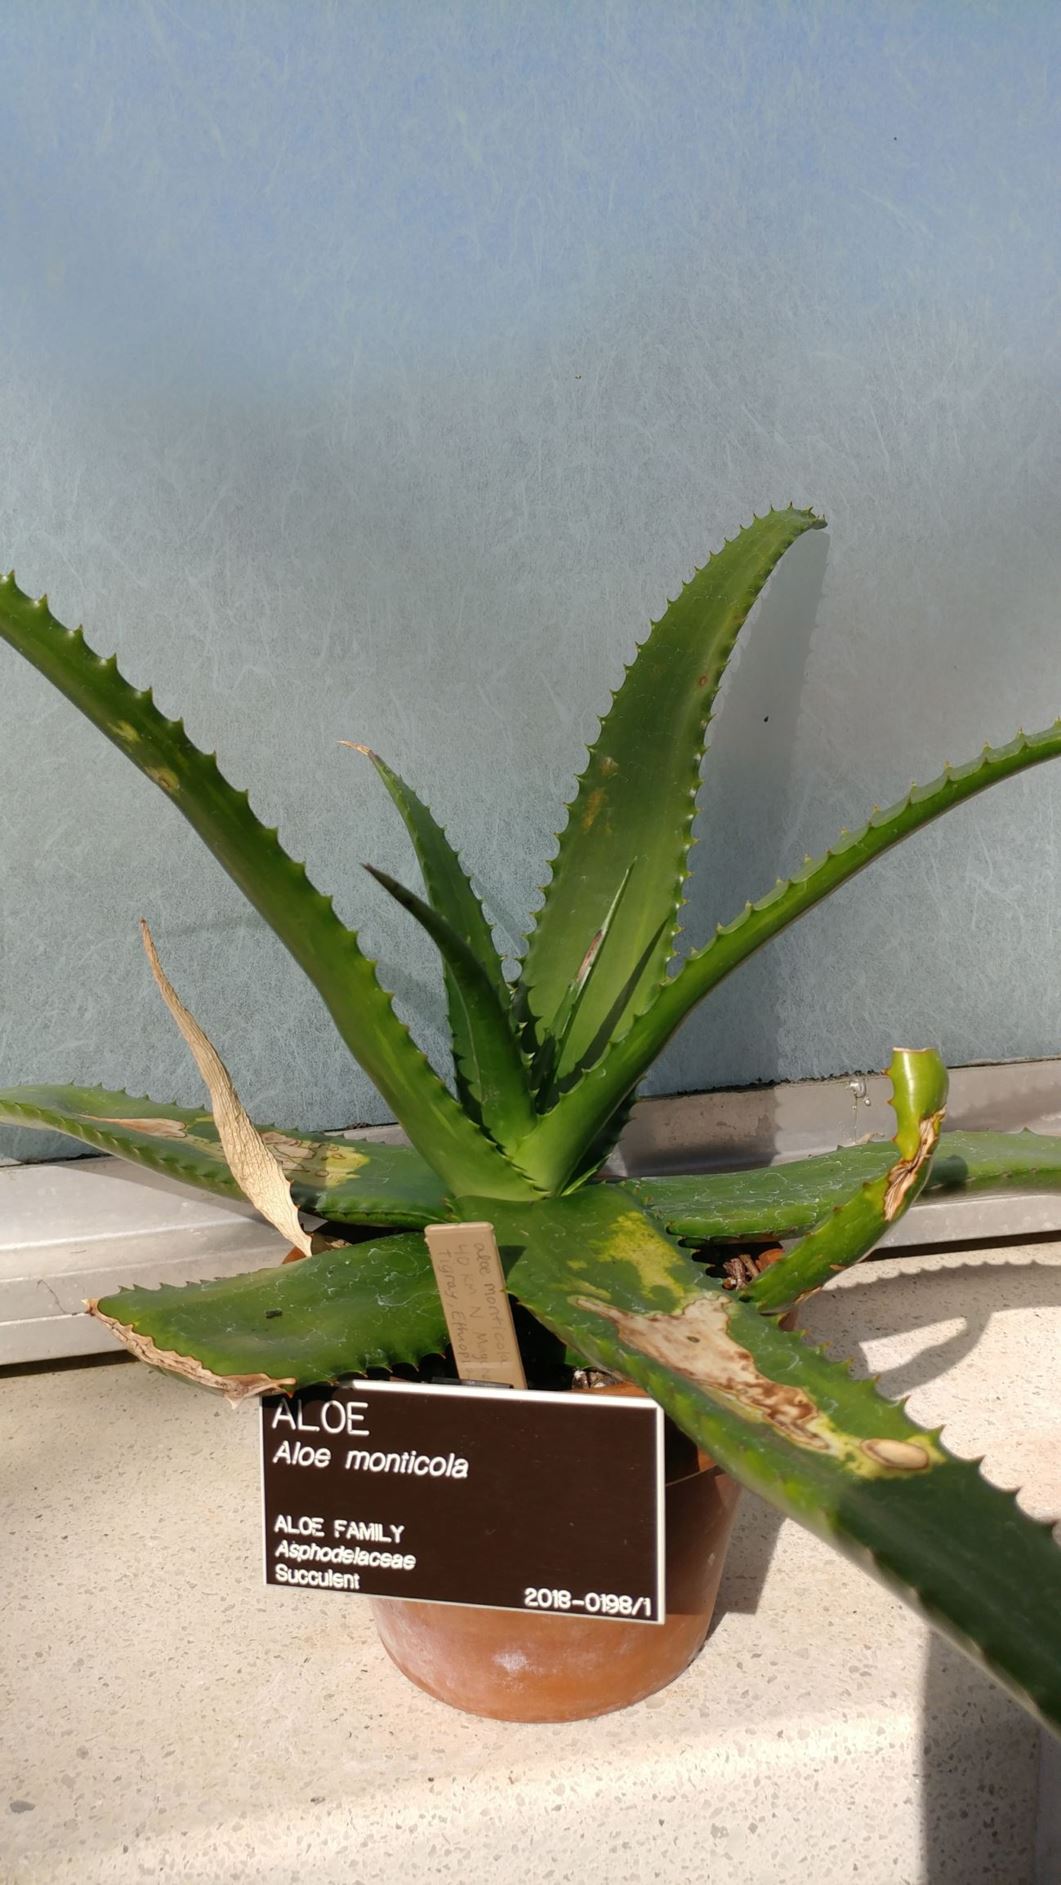 Aloe monticola - aloe